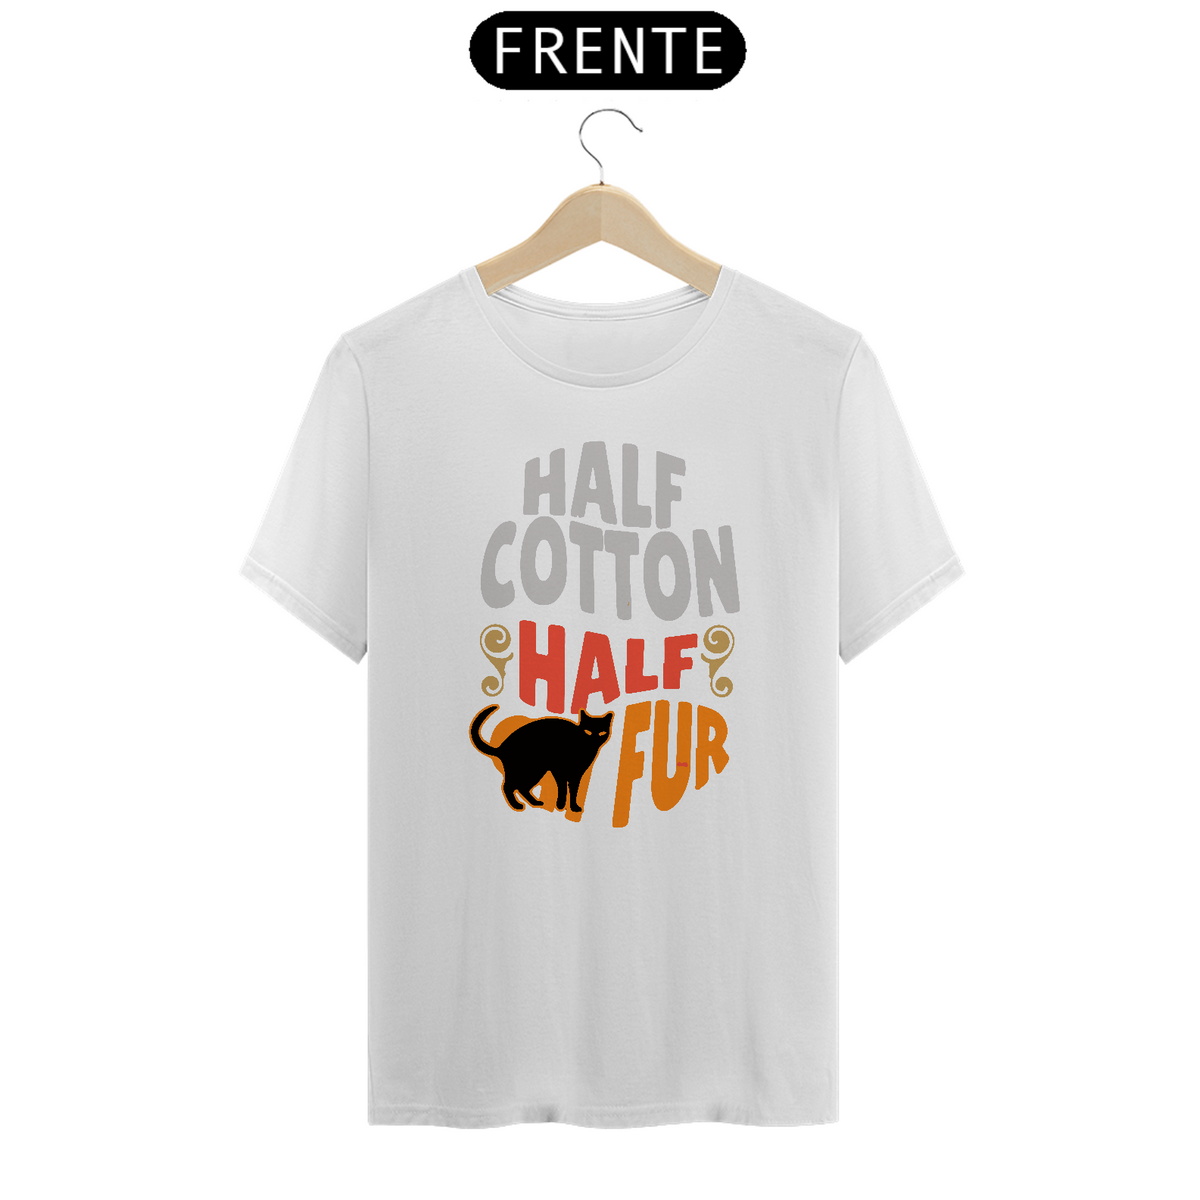 Nome do produto: PRIME - HALF COTTON HALF CAT FUR